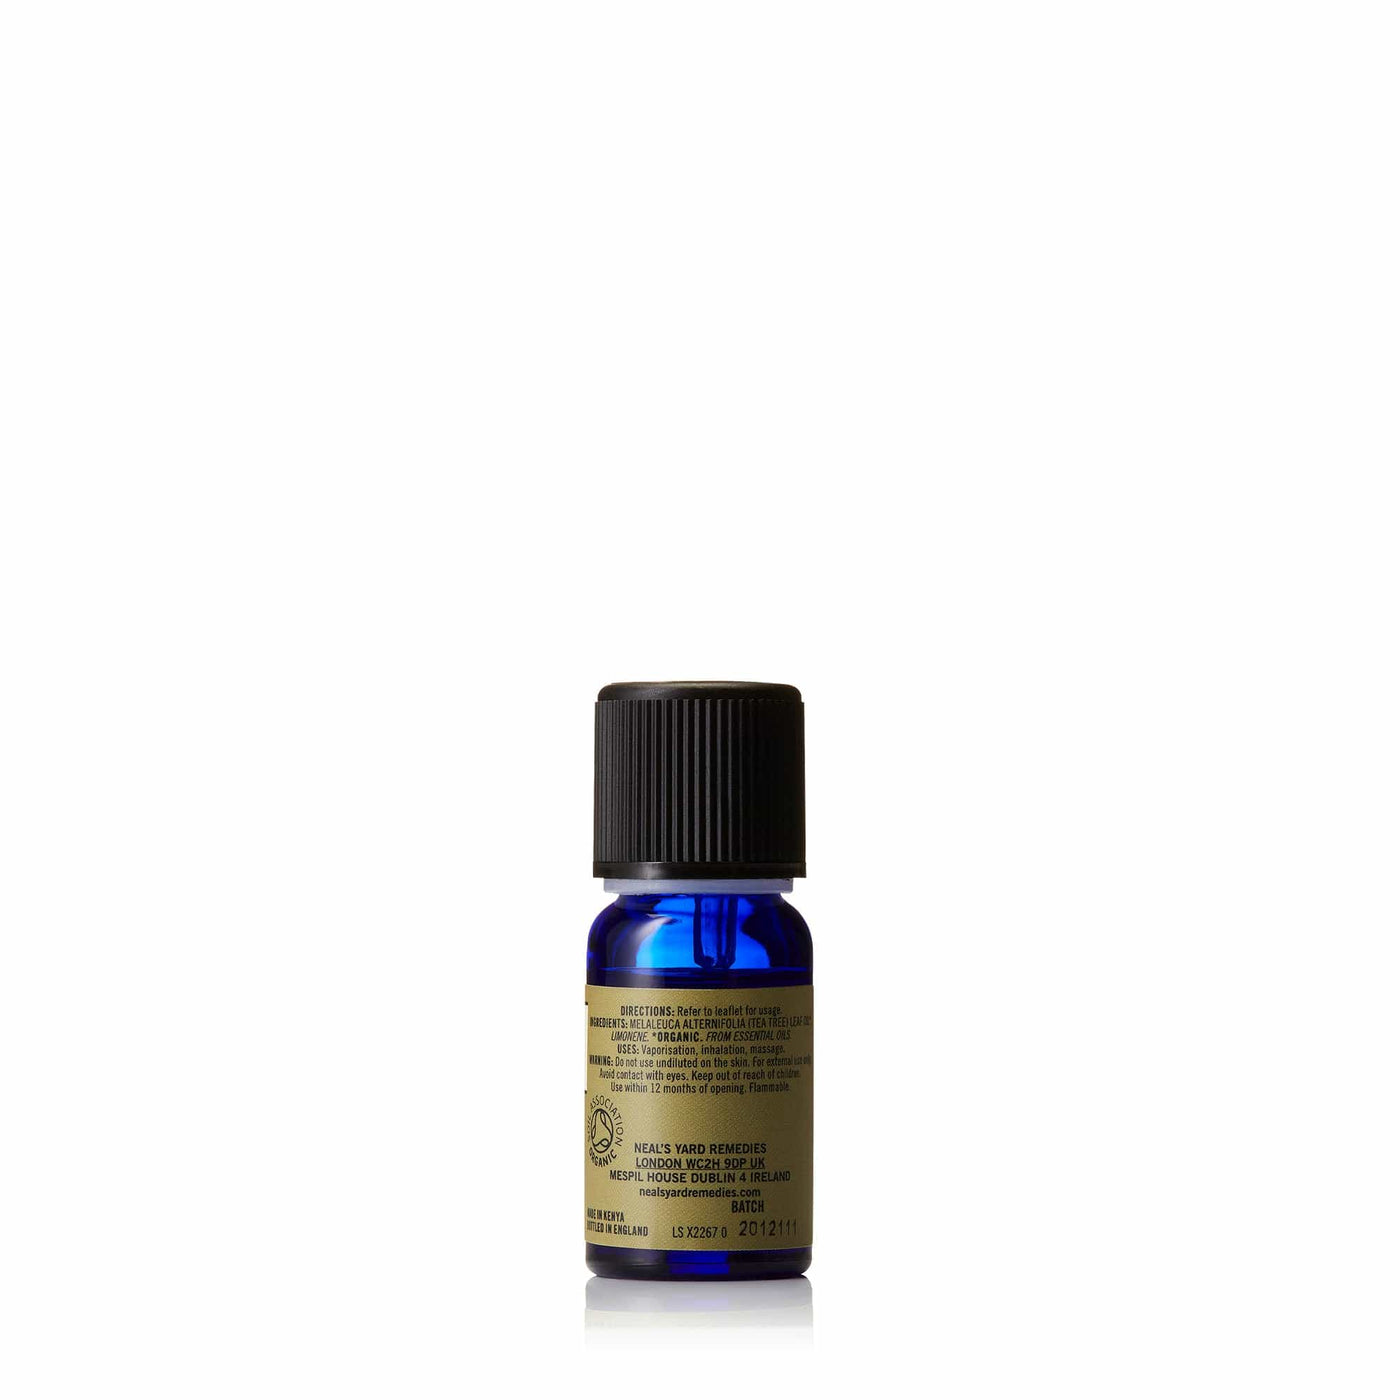 Neal's Yard Remedies Aromatherapy Tea Tree Organic Essential Oil .34 fl. oz